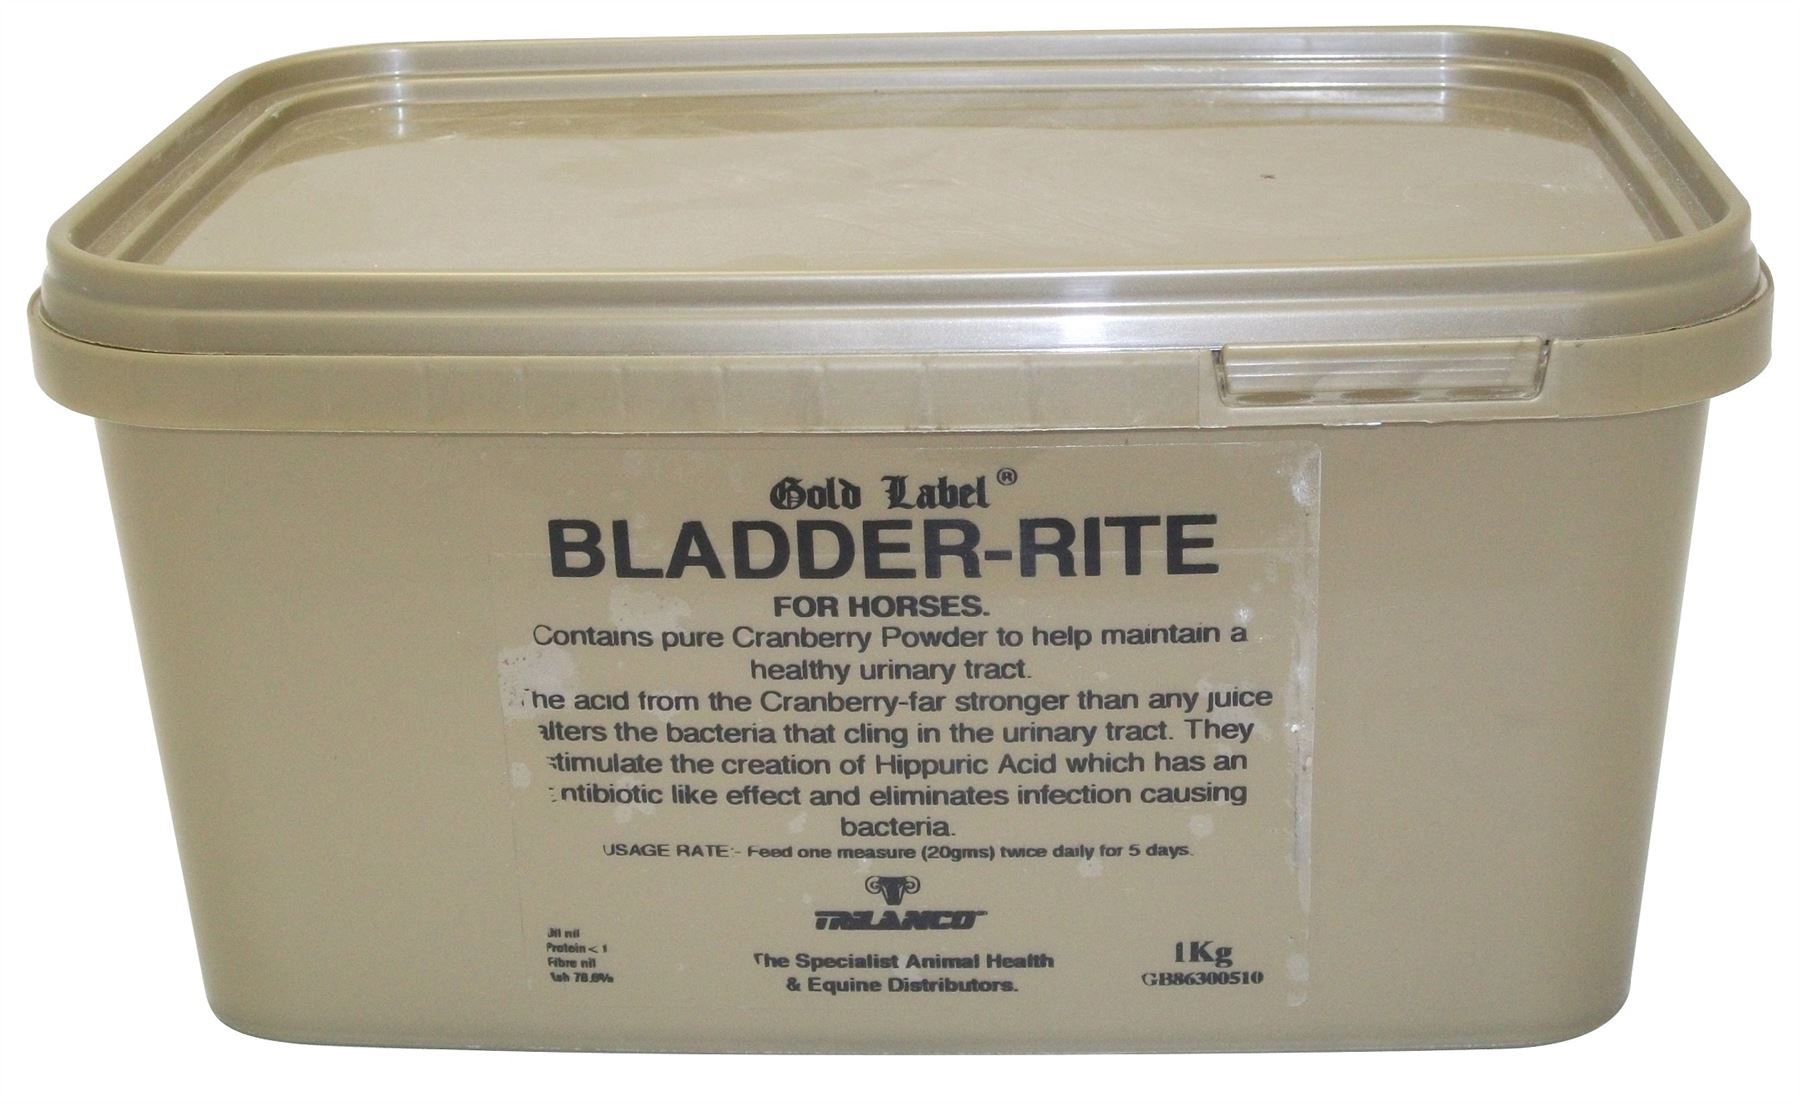 Gold Label Bladder-Rite - Just Horse Riders